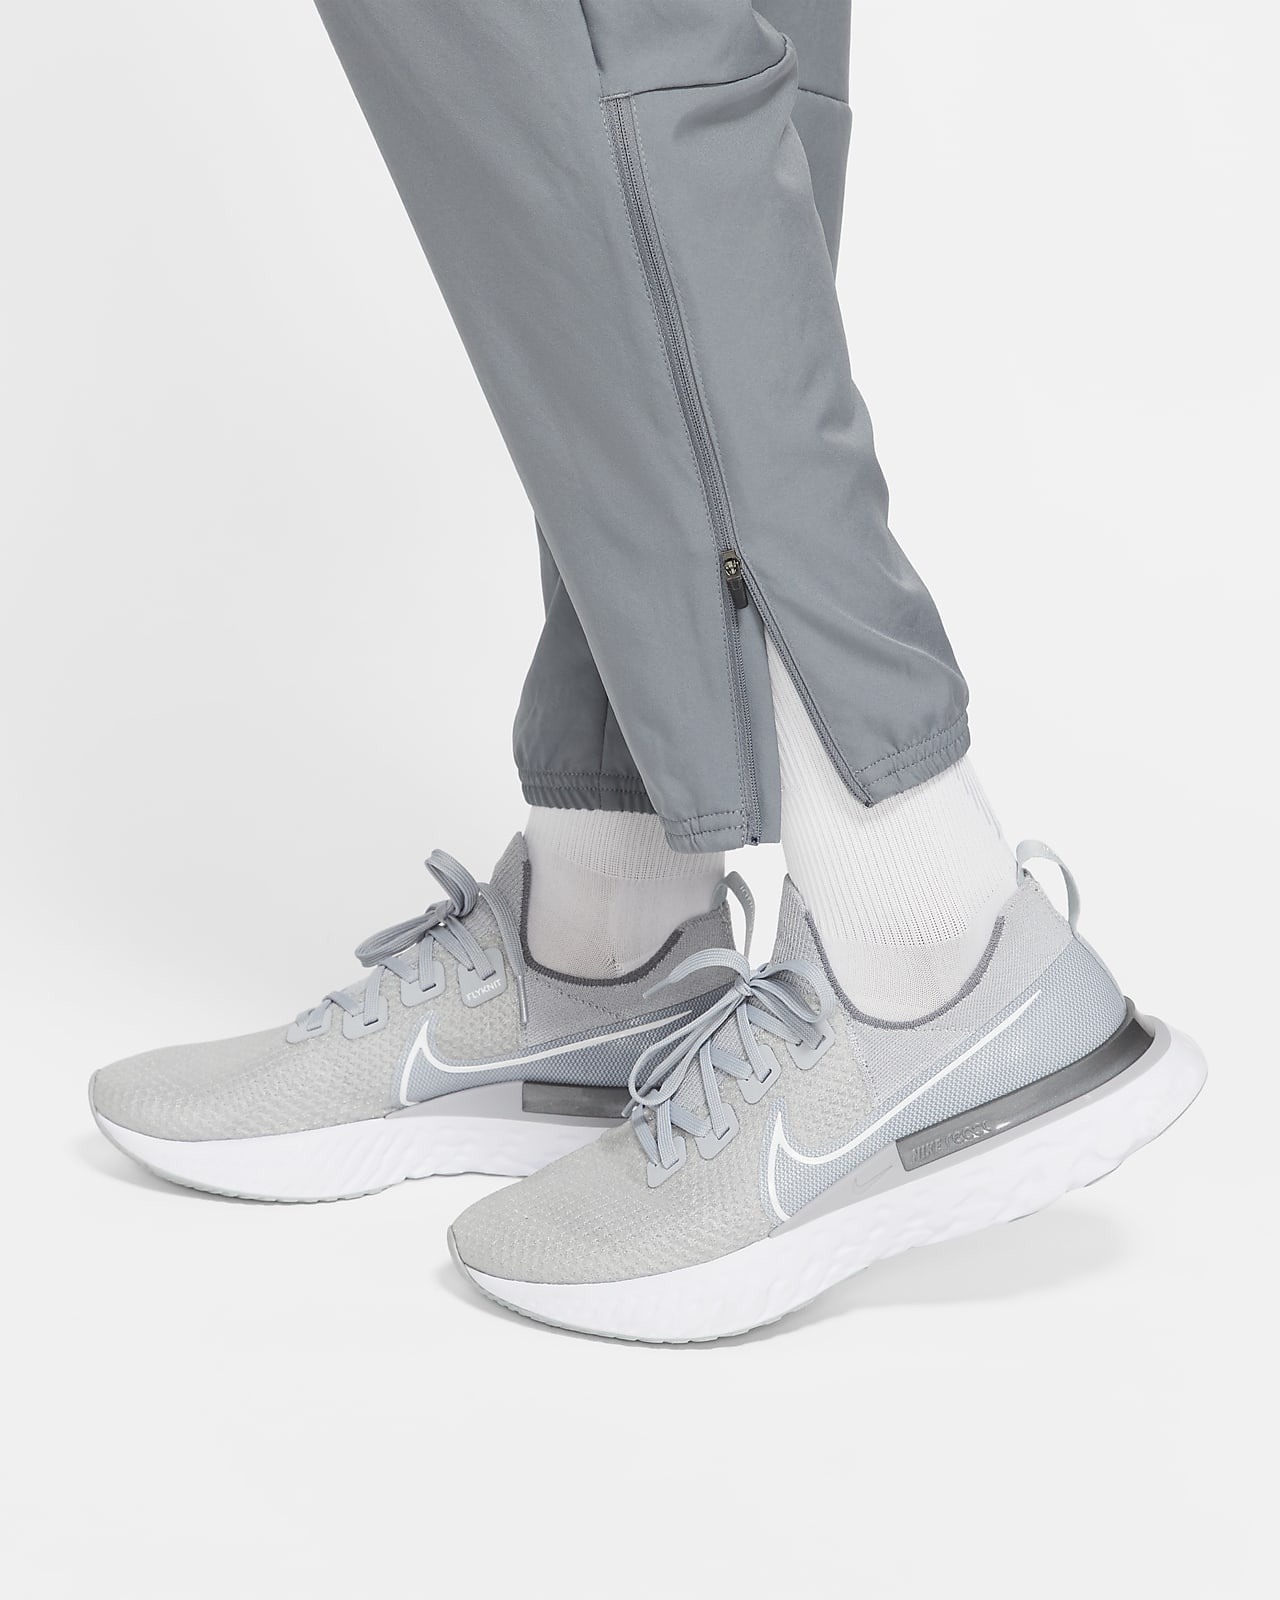 Men's Nike Dri-FIT Challenger Knit Running Pants